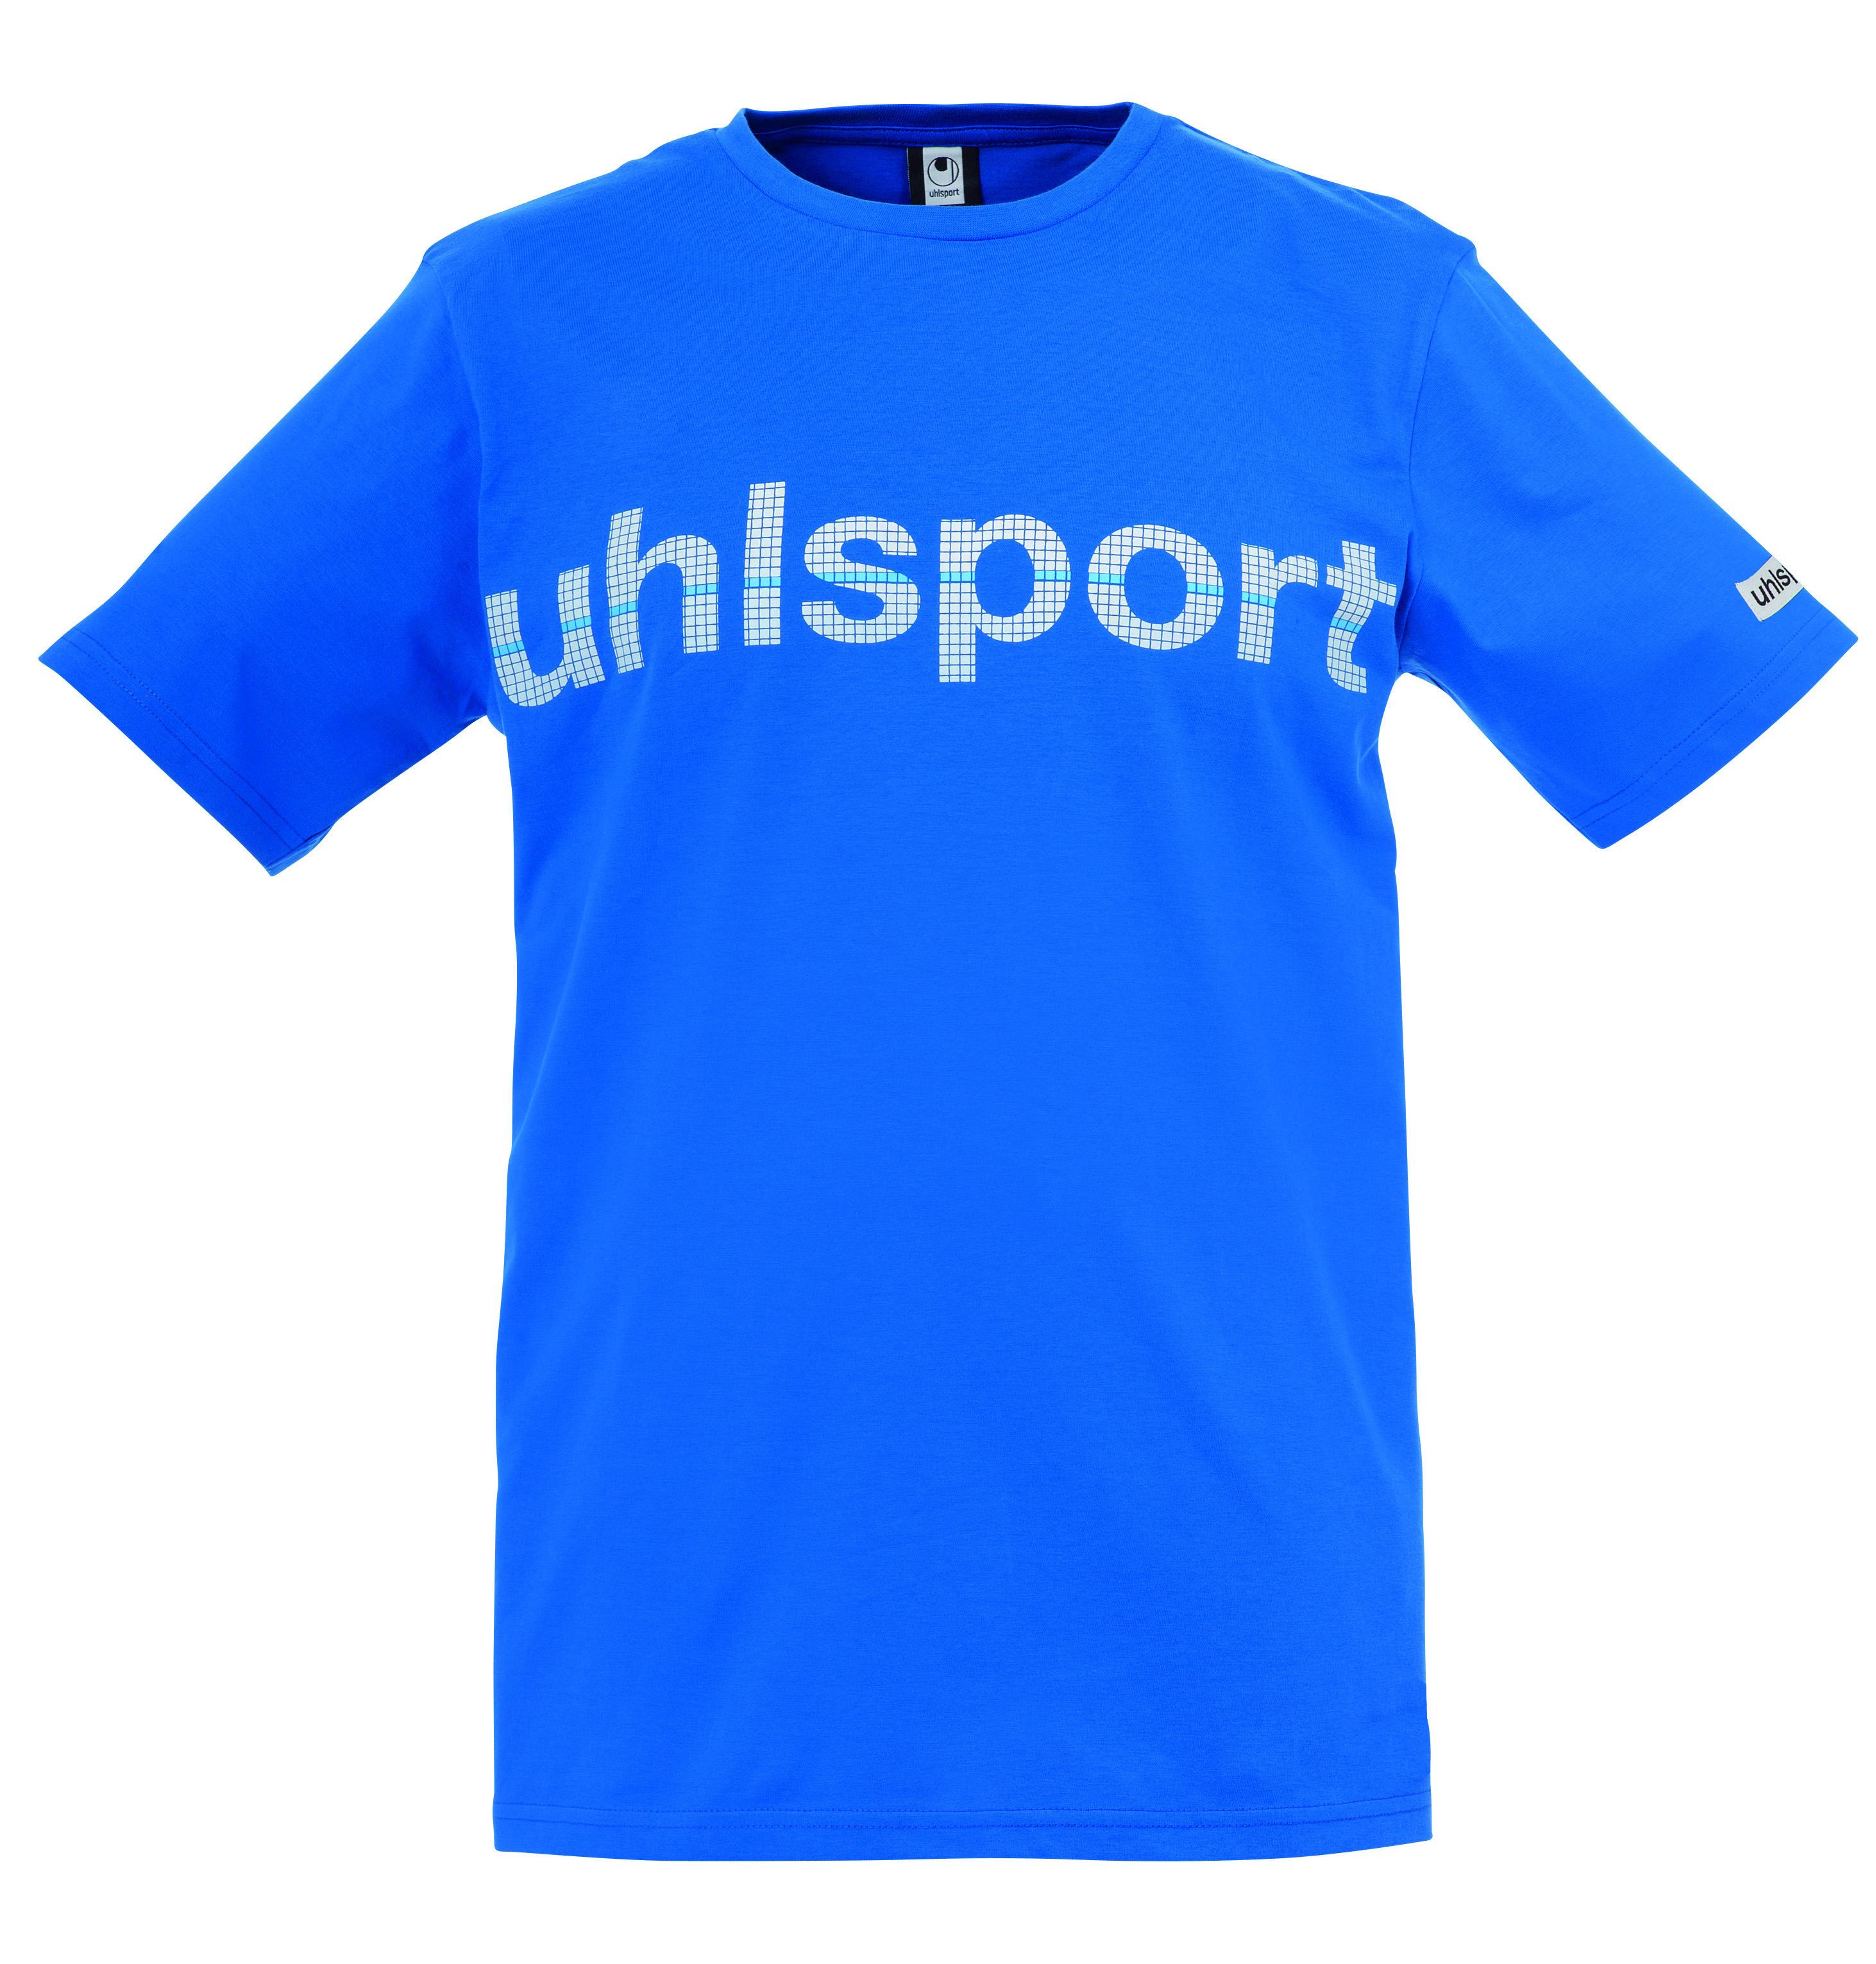 Uhlsport Promo Tee azurově modrá UK XL